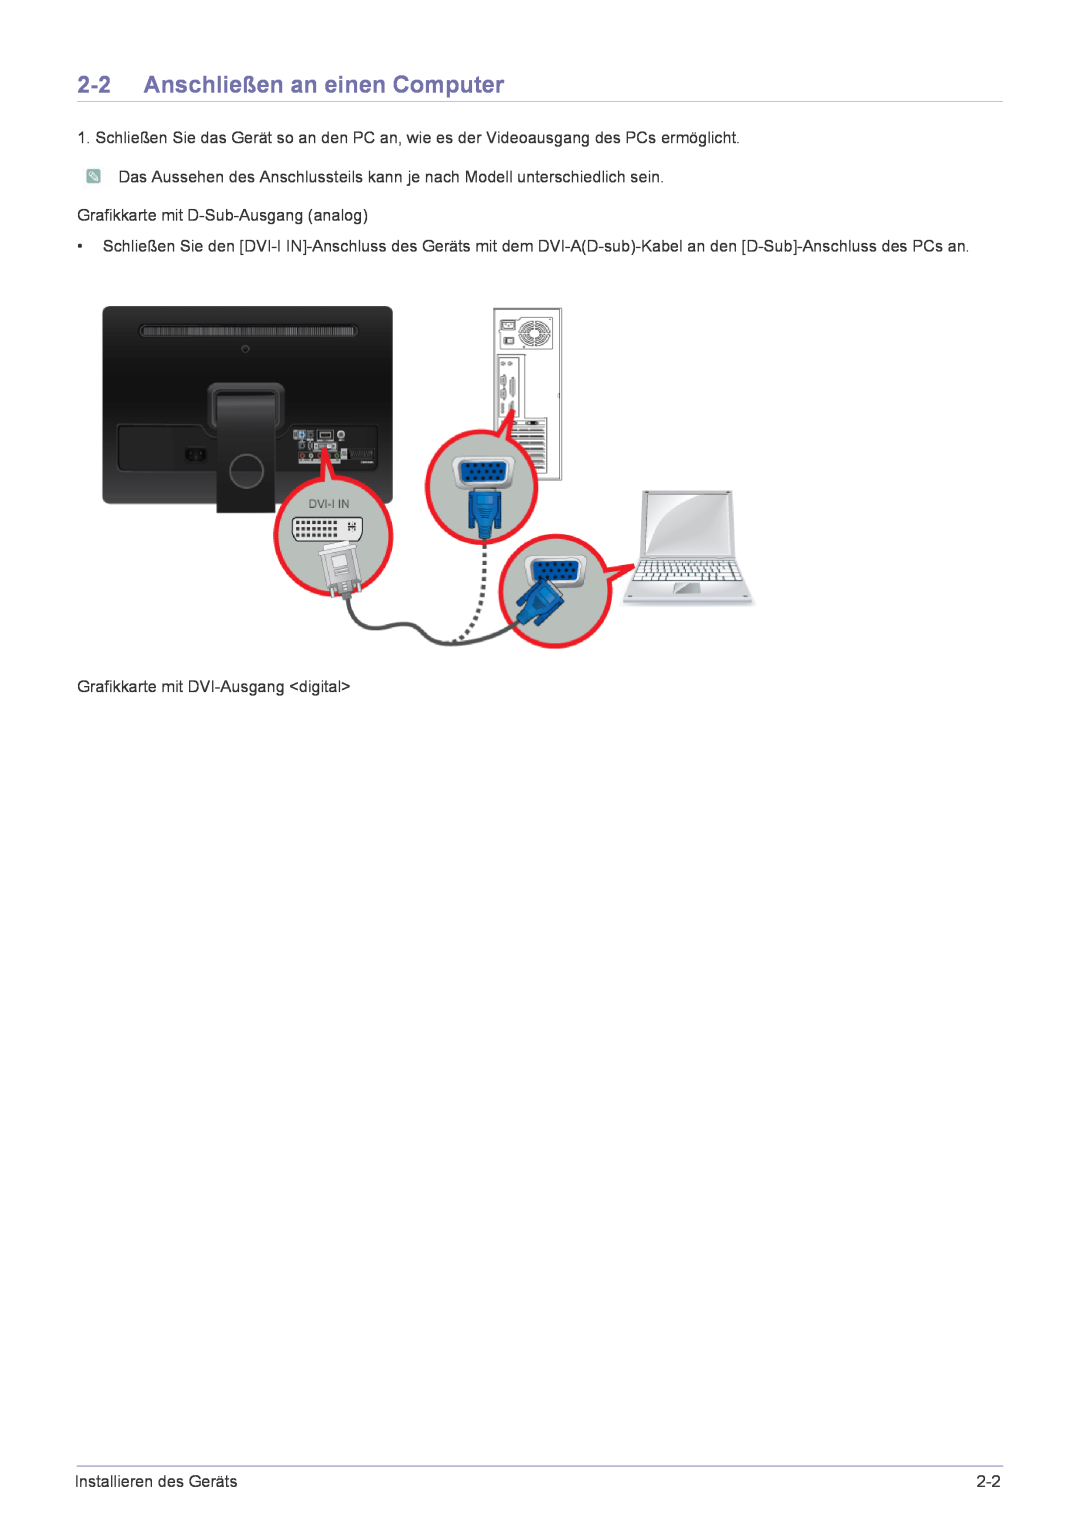 Samsung LS22FMDGF/EN manual Anschließen an einen Computer, Grafikkarte mit D-Sub-Ausgang analog, Installieren des Geräts 